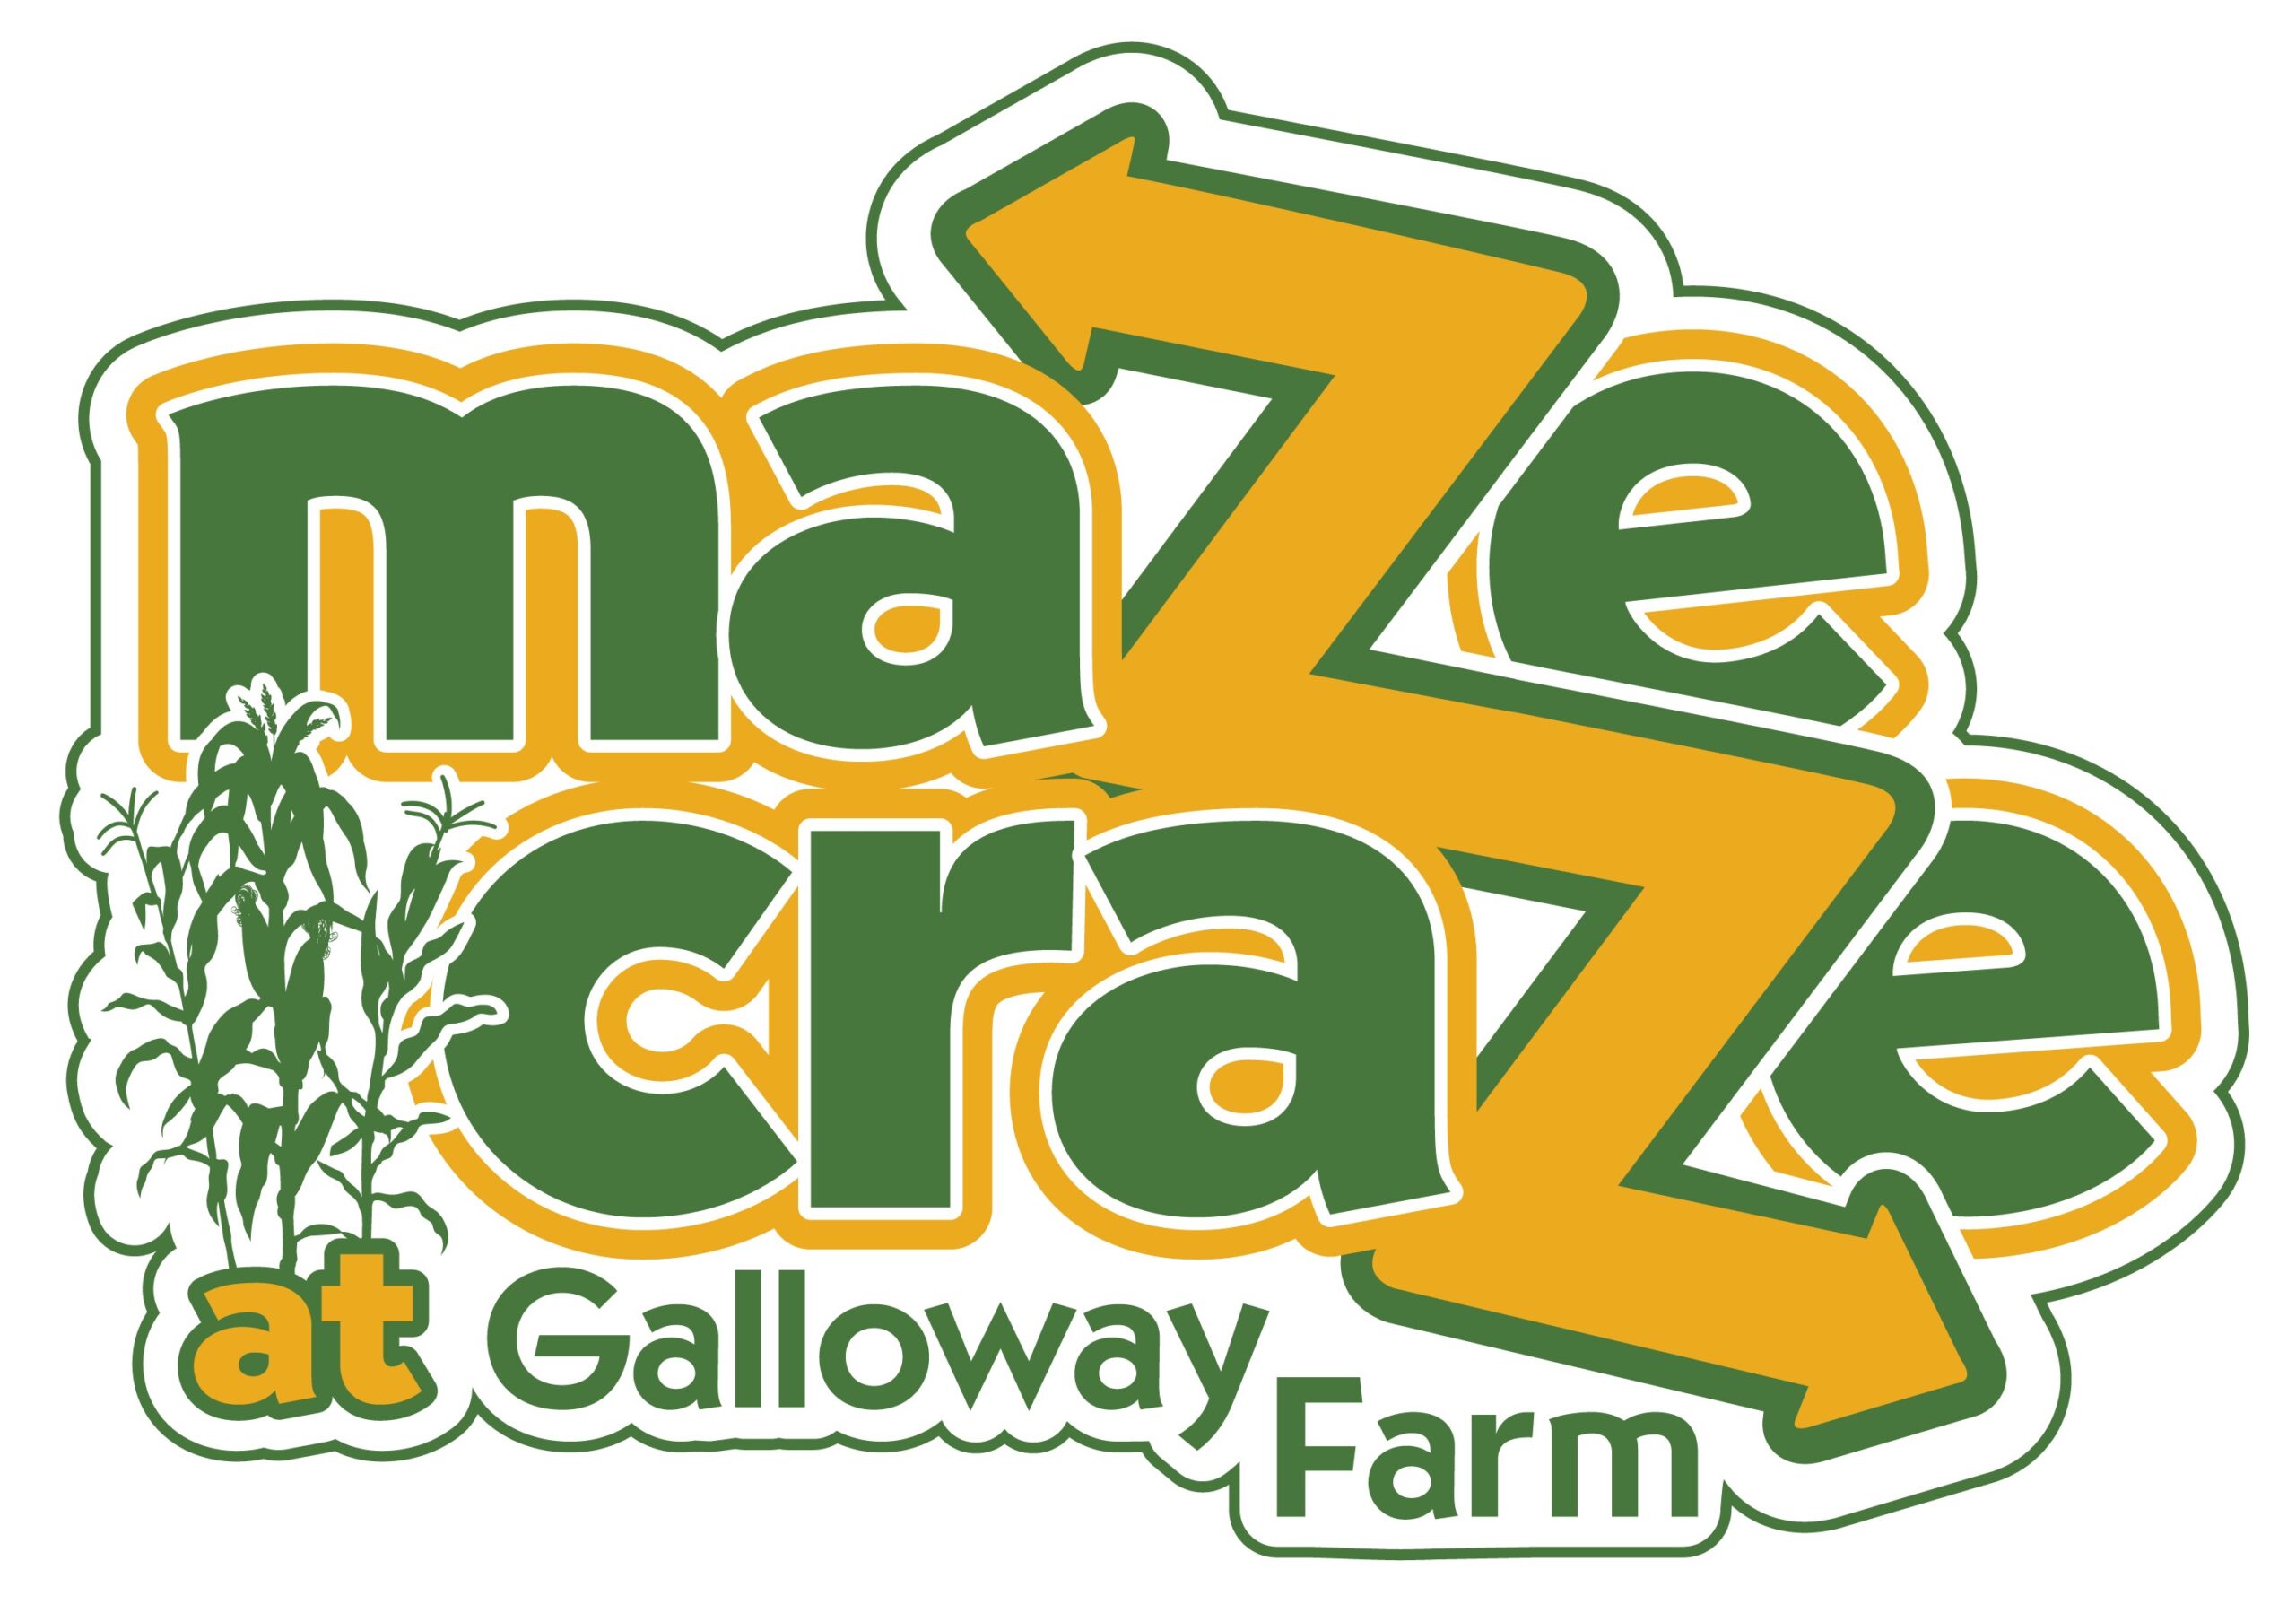 Maze Craze at Galloway Farm